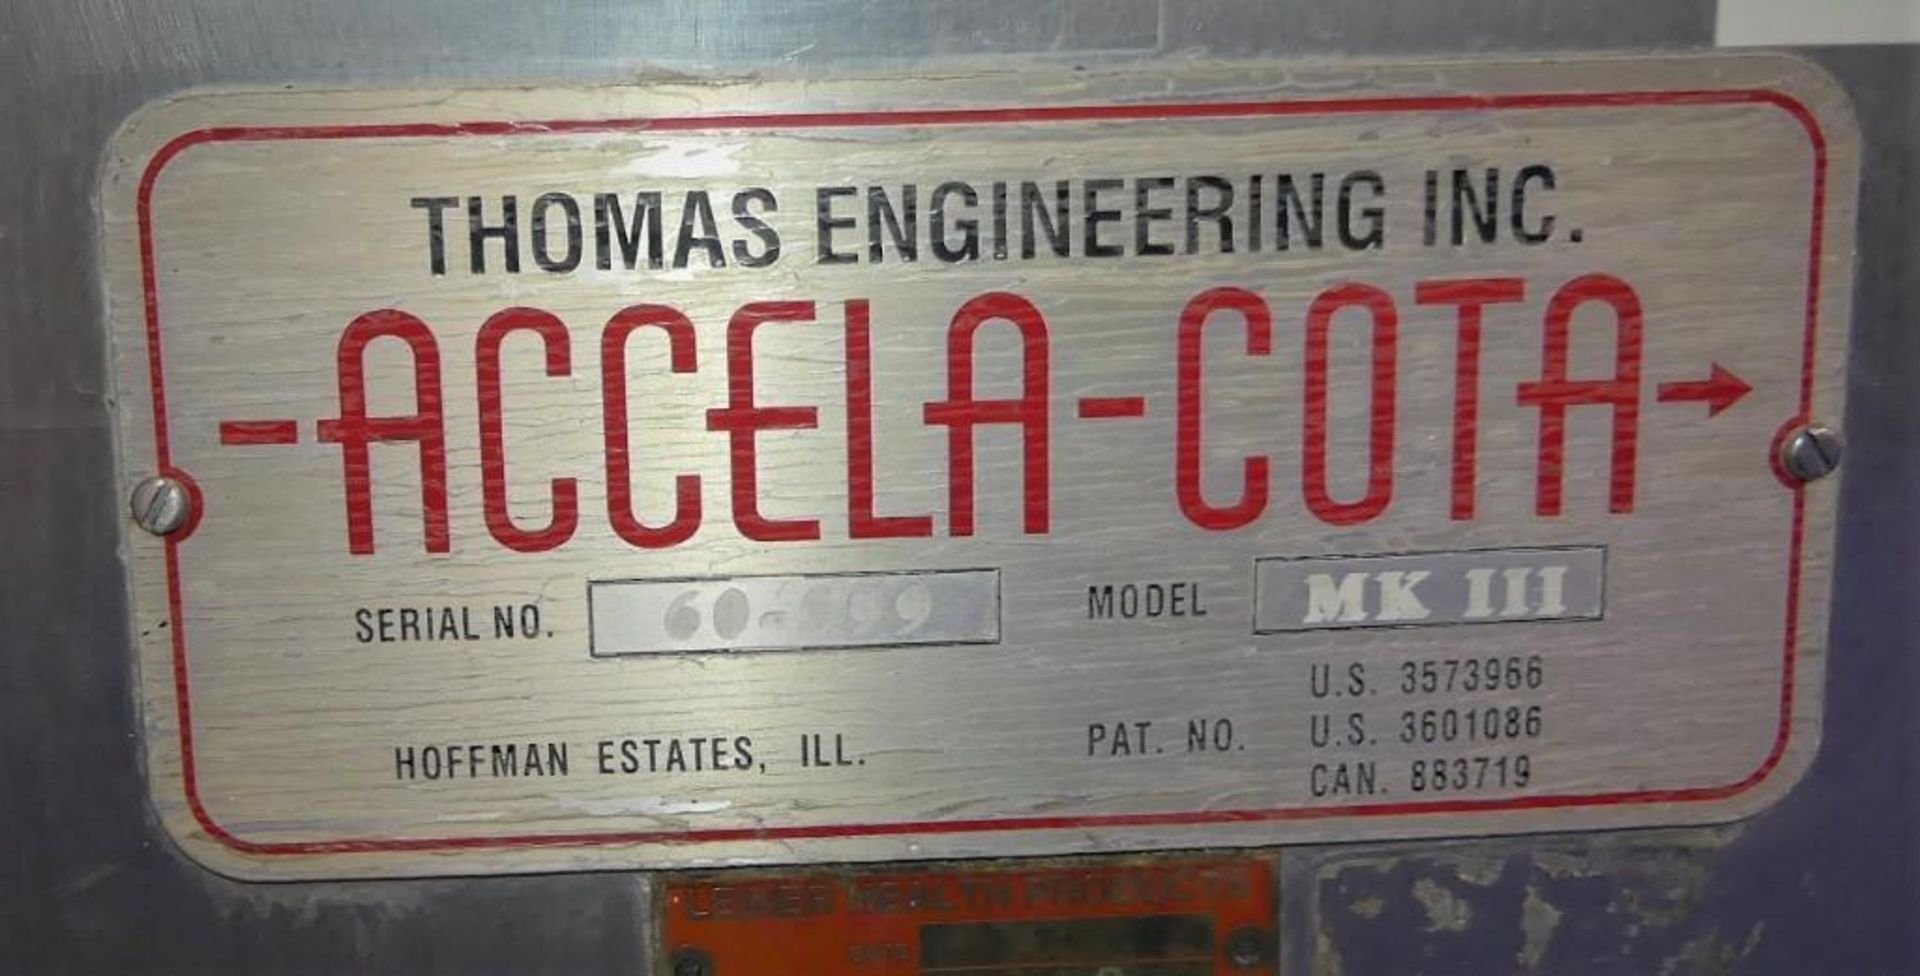 Thomas Engineering Accela-Cota MKIII Spray Coater - Image 8 of 8